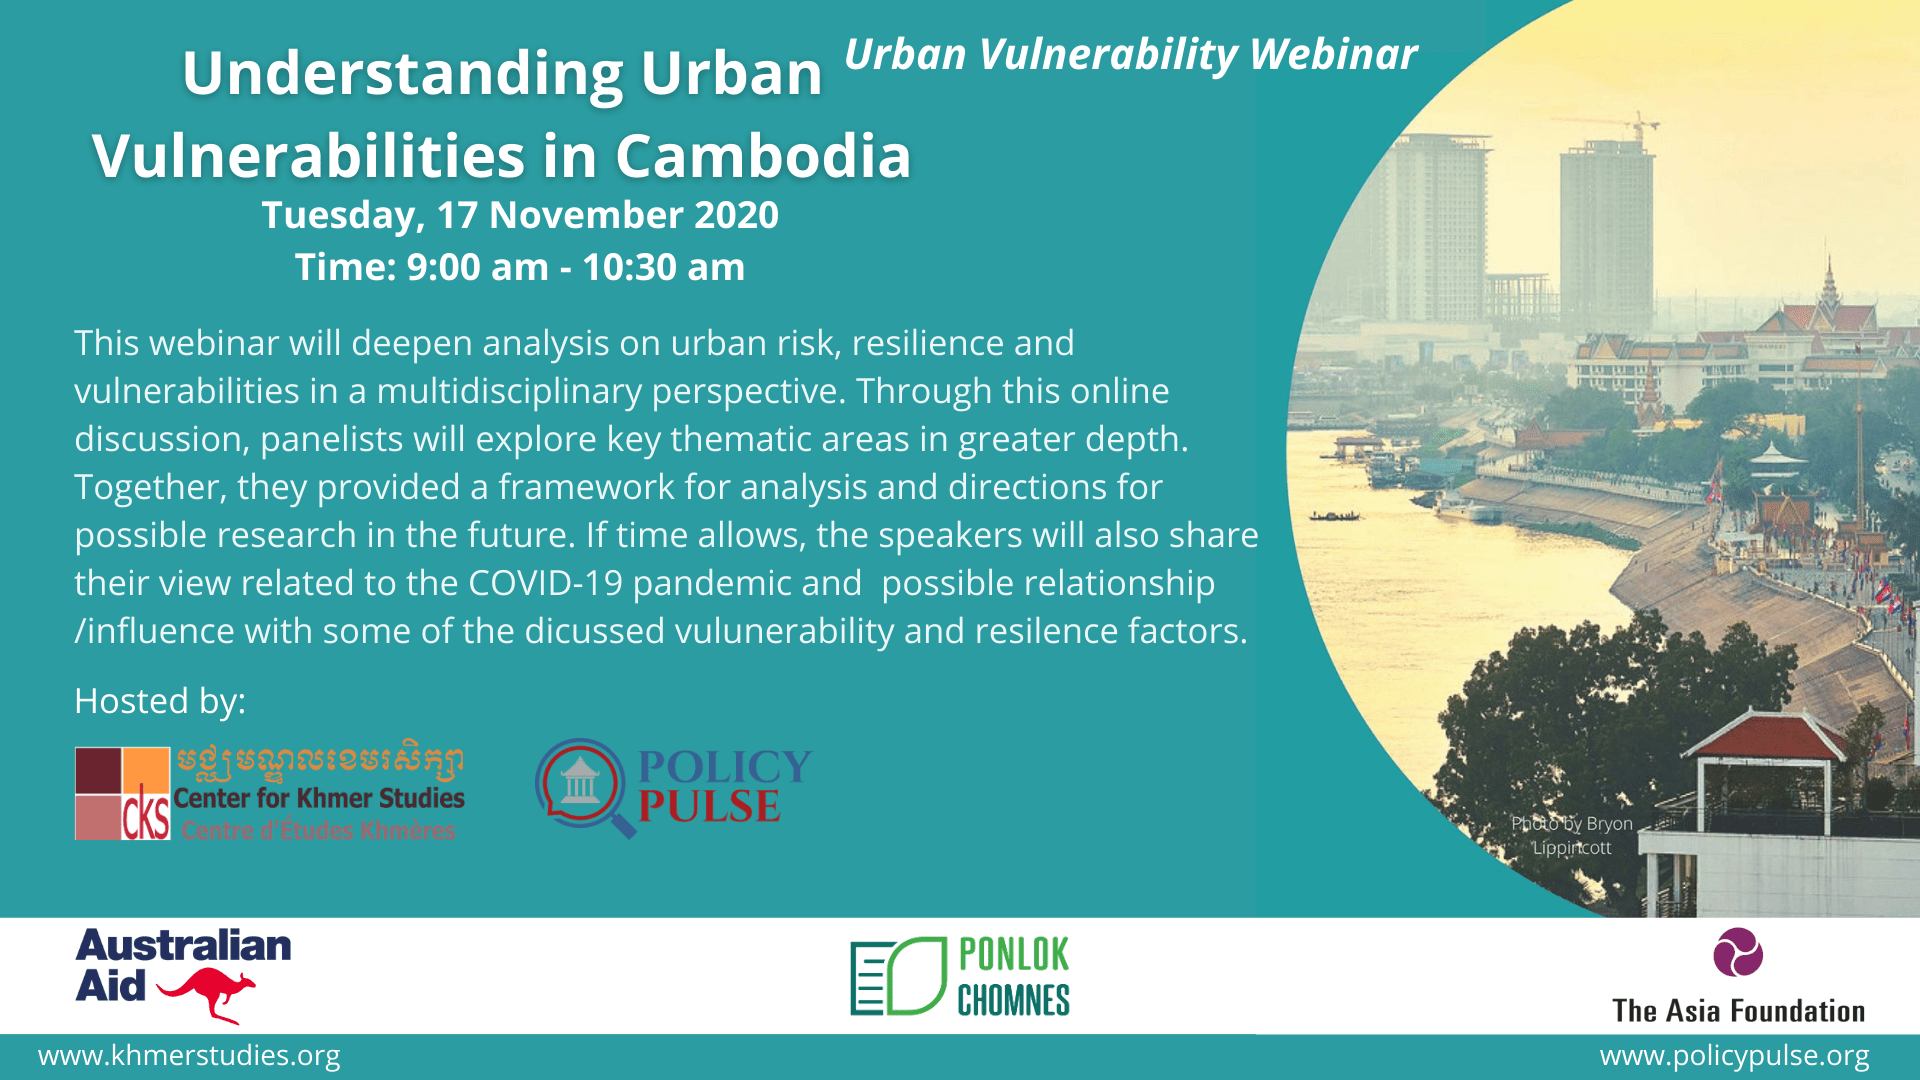 Understanding Urban Vulnerabilities in Cambodia CKS Center for